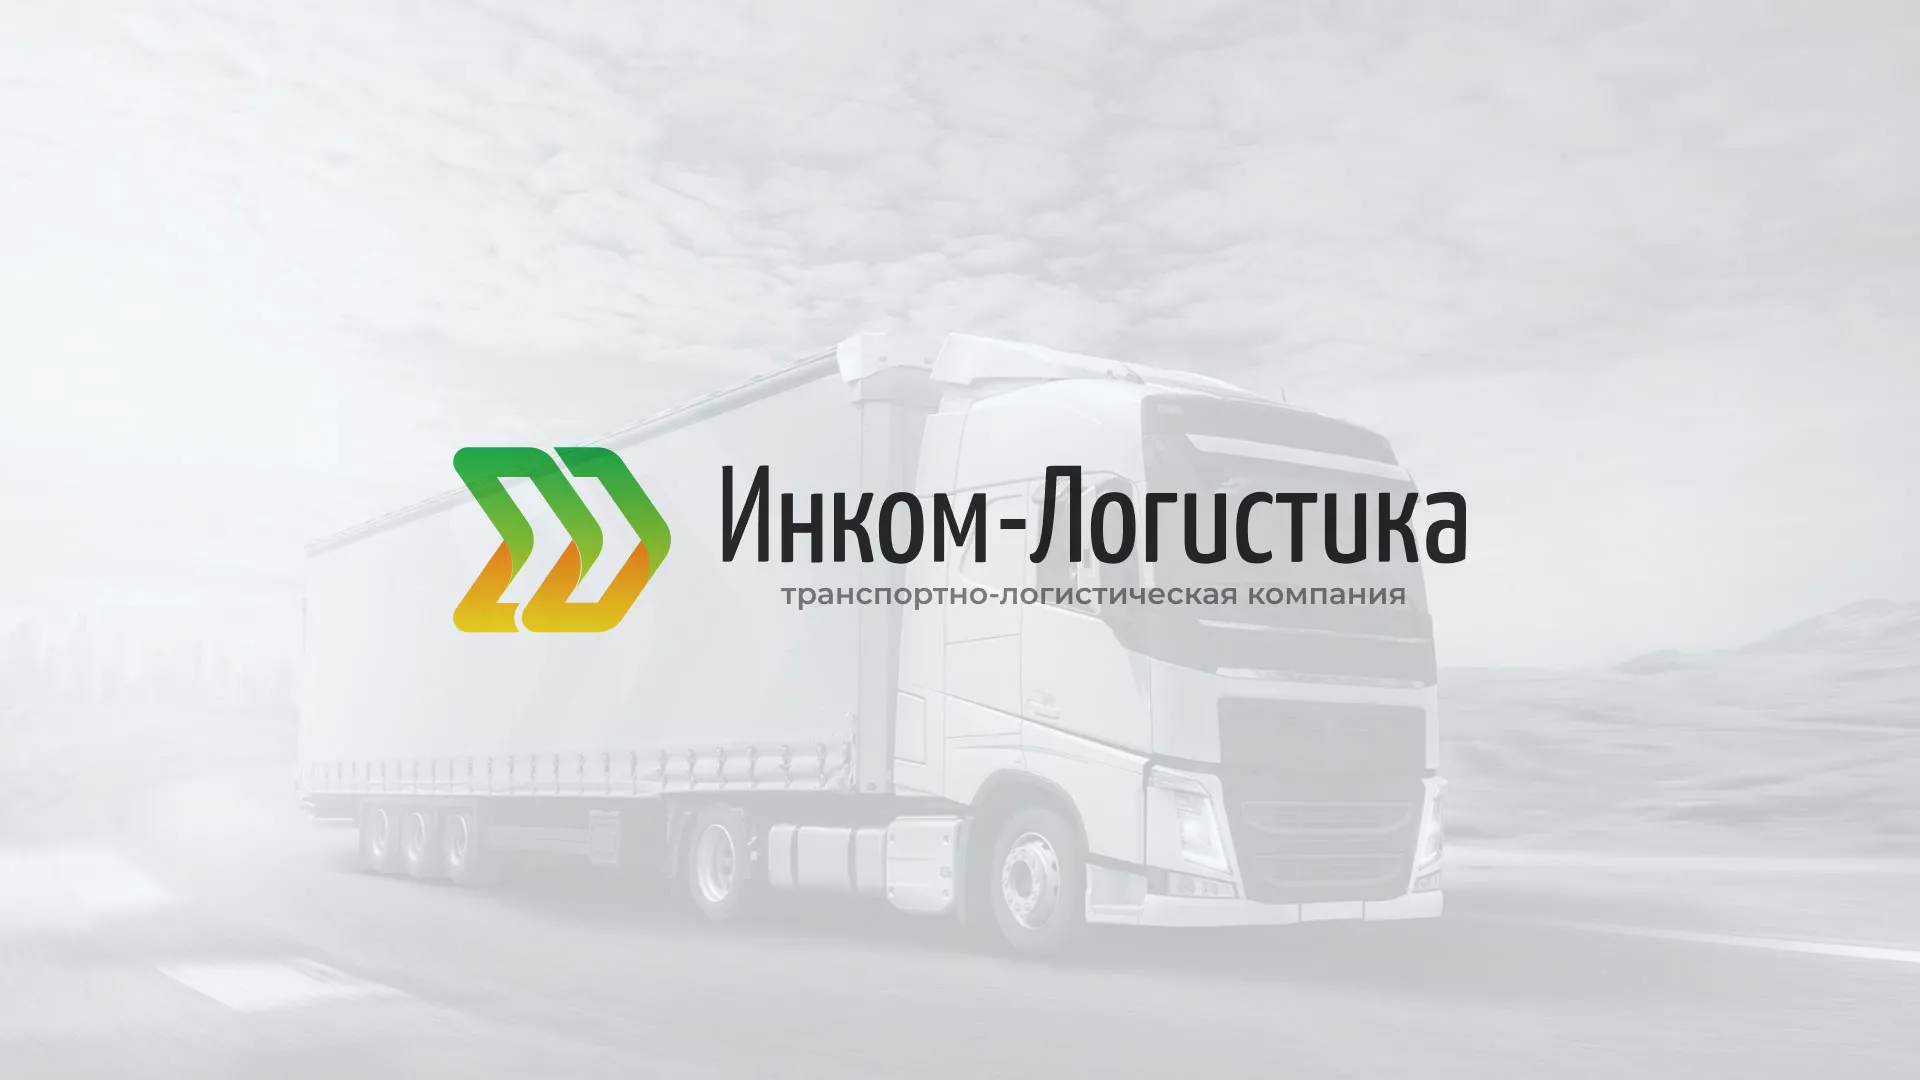 Разработка логотипа и сайта компании «Инком-Логистика» в Ярославле